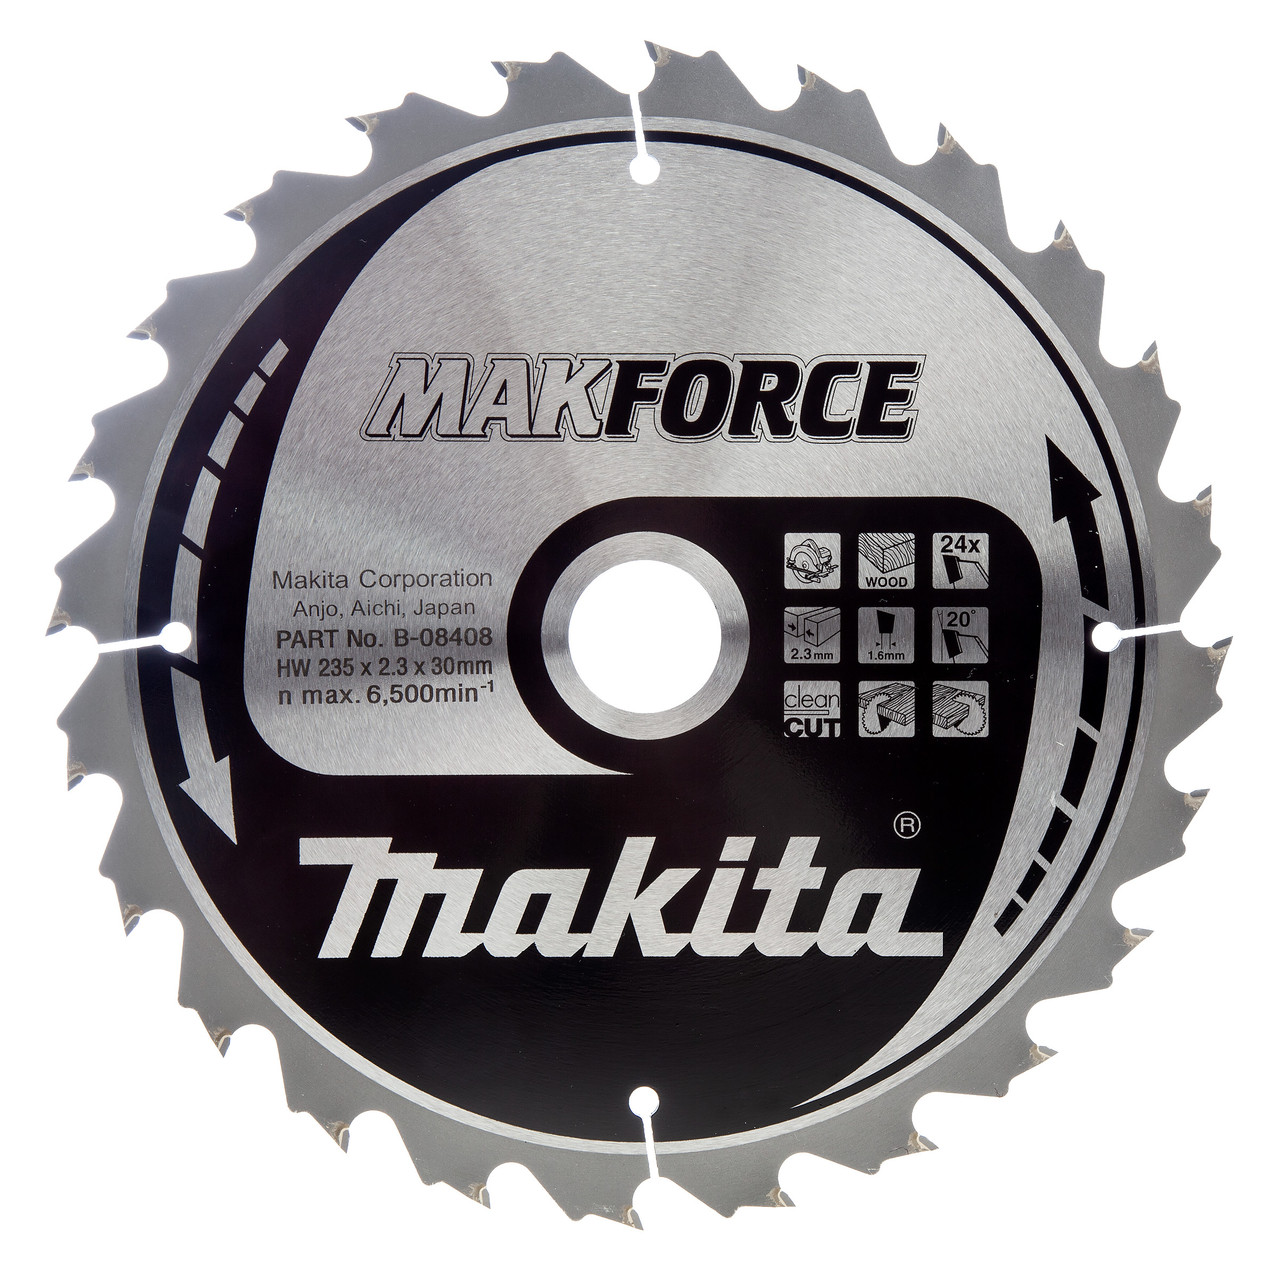 Photos - Power Tool Accessory Makita B-08408 MAKFORCE Circular Saw Blade for Wood 235 x 30mm x 24T 